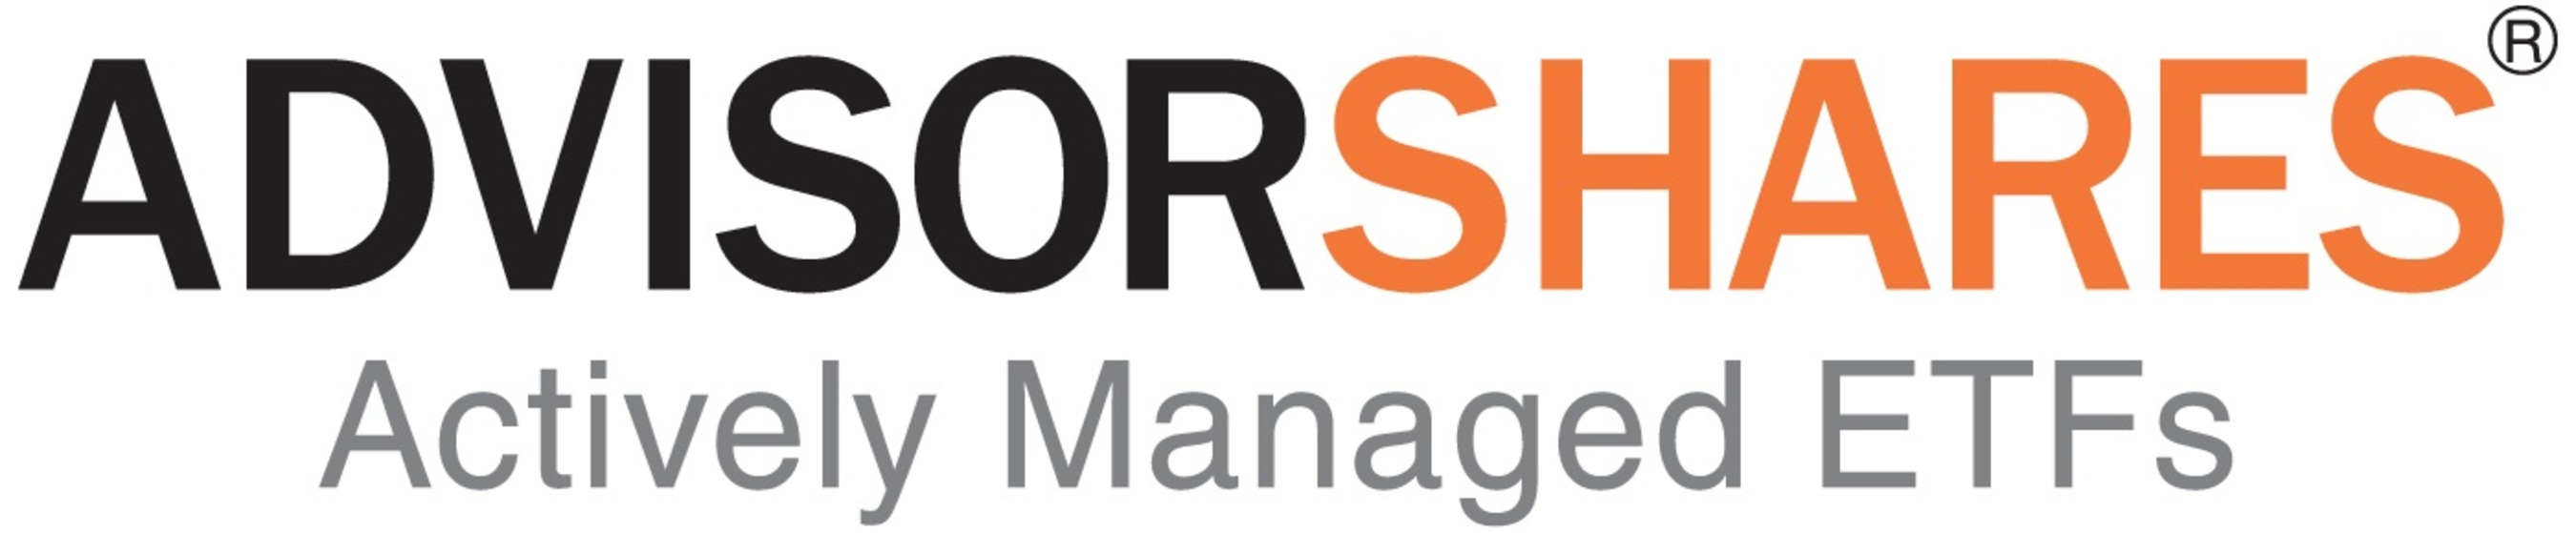 AdvisorShares logo.